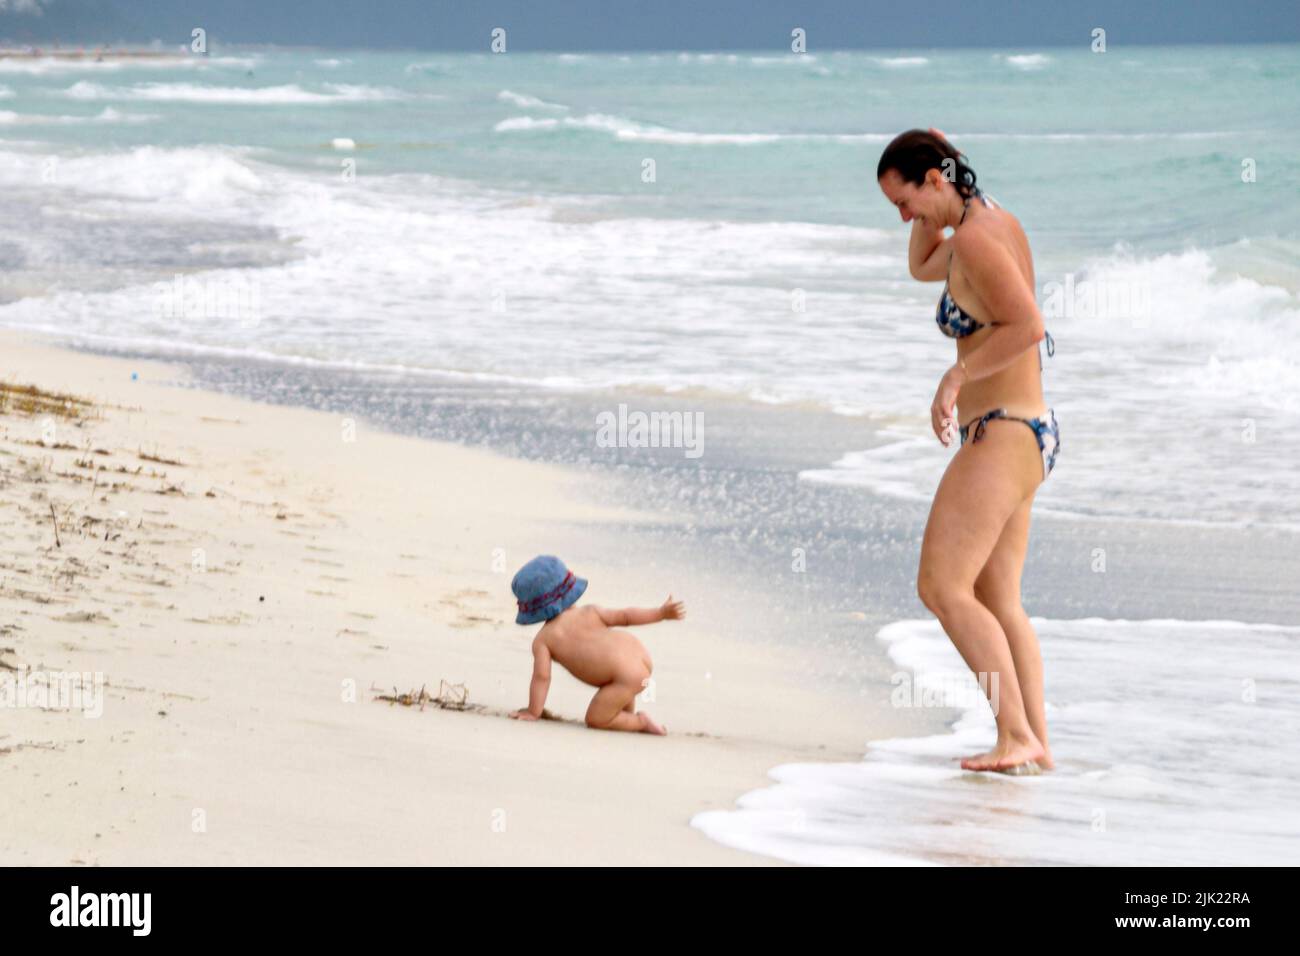 Miami Beach Florida, costa atlántica costa costa costa costa costa mar, bebé bebés niño llevar sombrero, gateando cerca surf desnudo madre ver Foto de stock